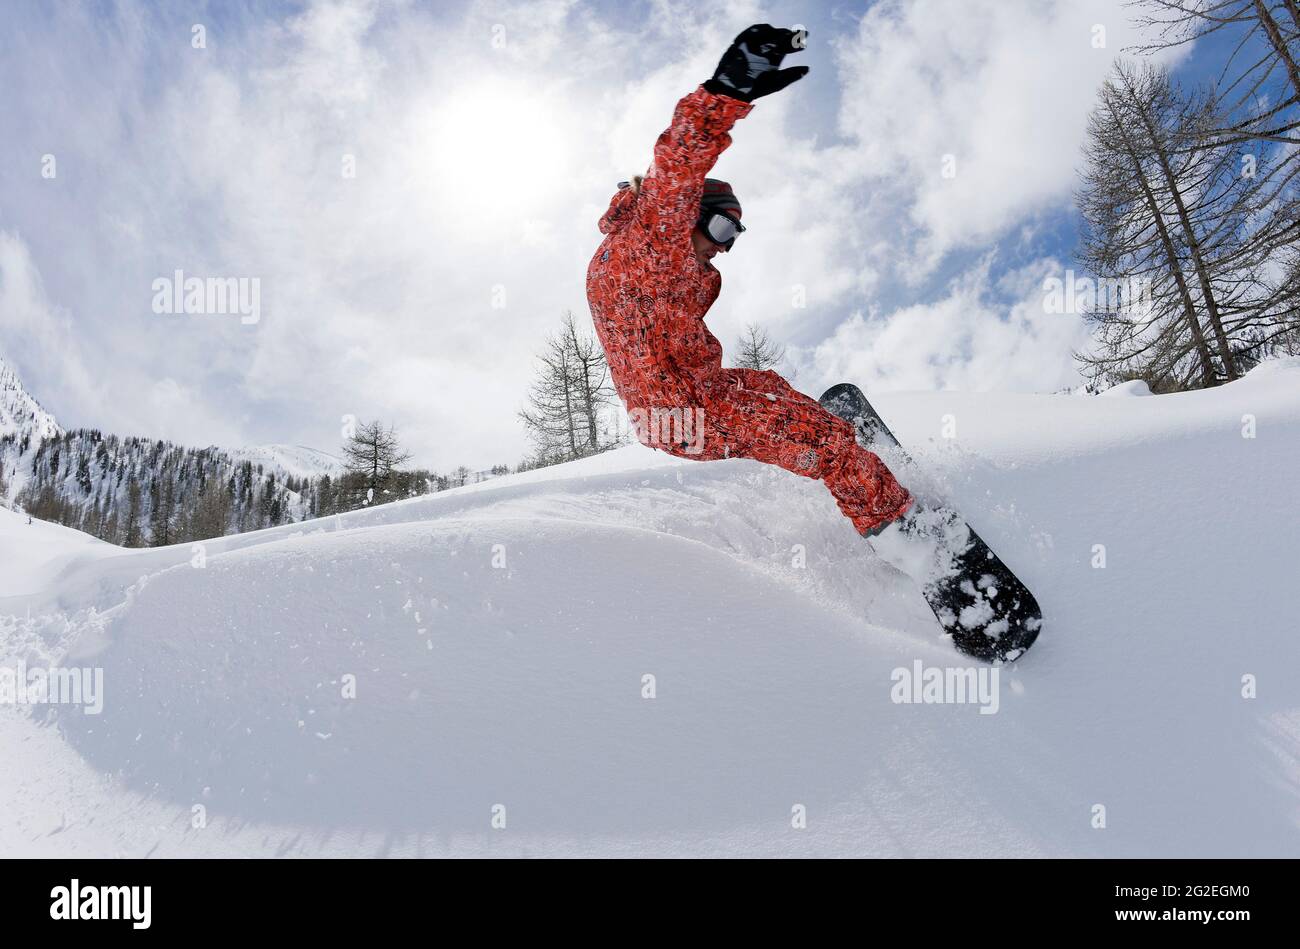 FRANCE. ALPES-MARITIMES (06) SKI RESORT OF ISOLA 2000. MERCANTOUR NATIONAL PARK. SNOWBOARD Stock Photo